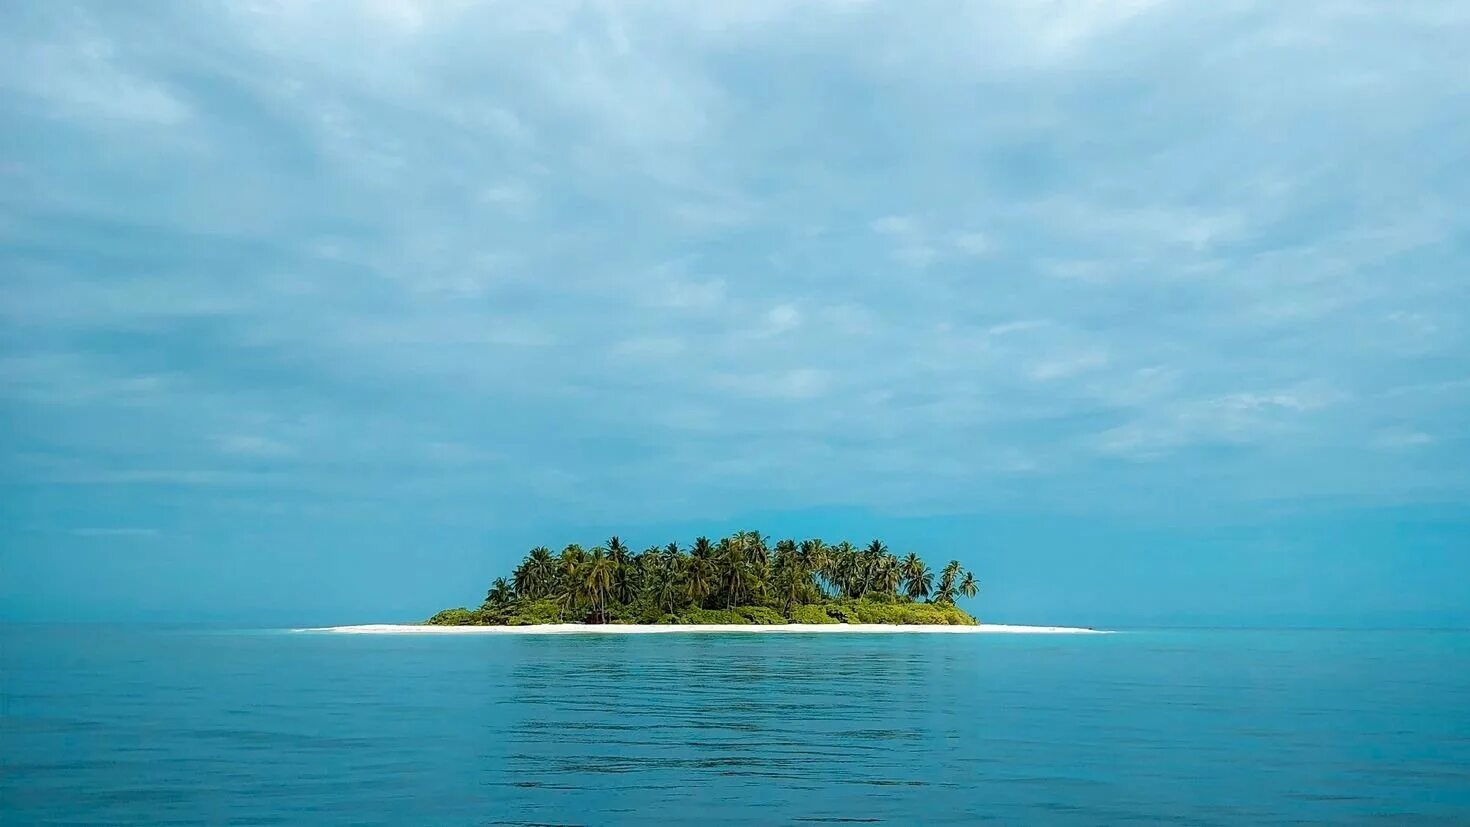 Океан и два острова. Андаманские острова. Острова и море. Остров на горизонте. Остров в океане.